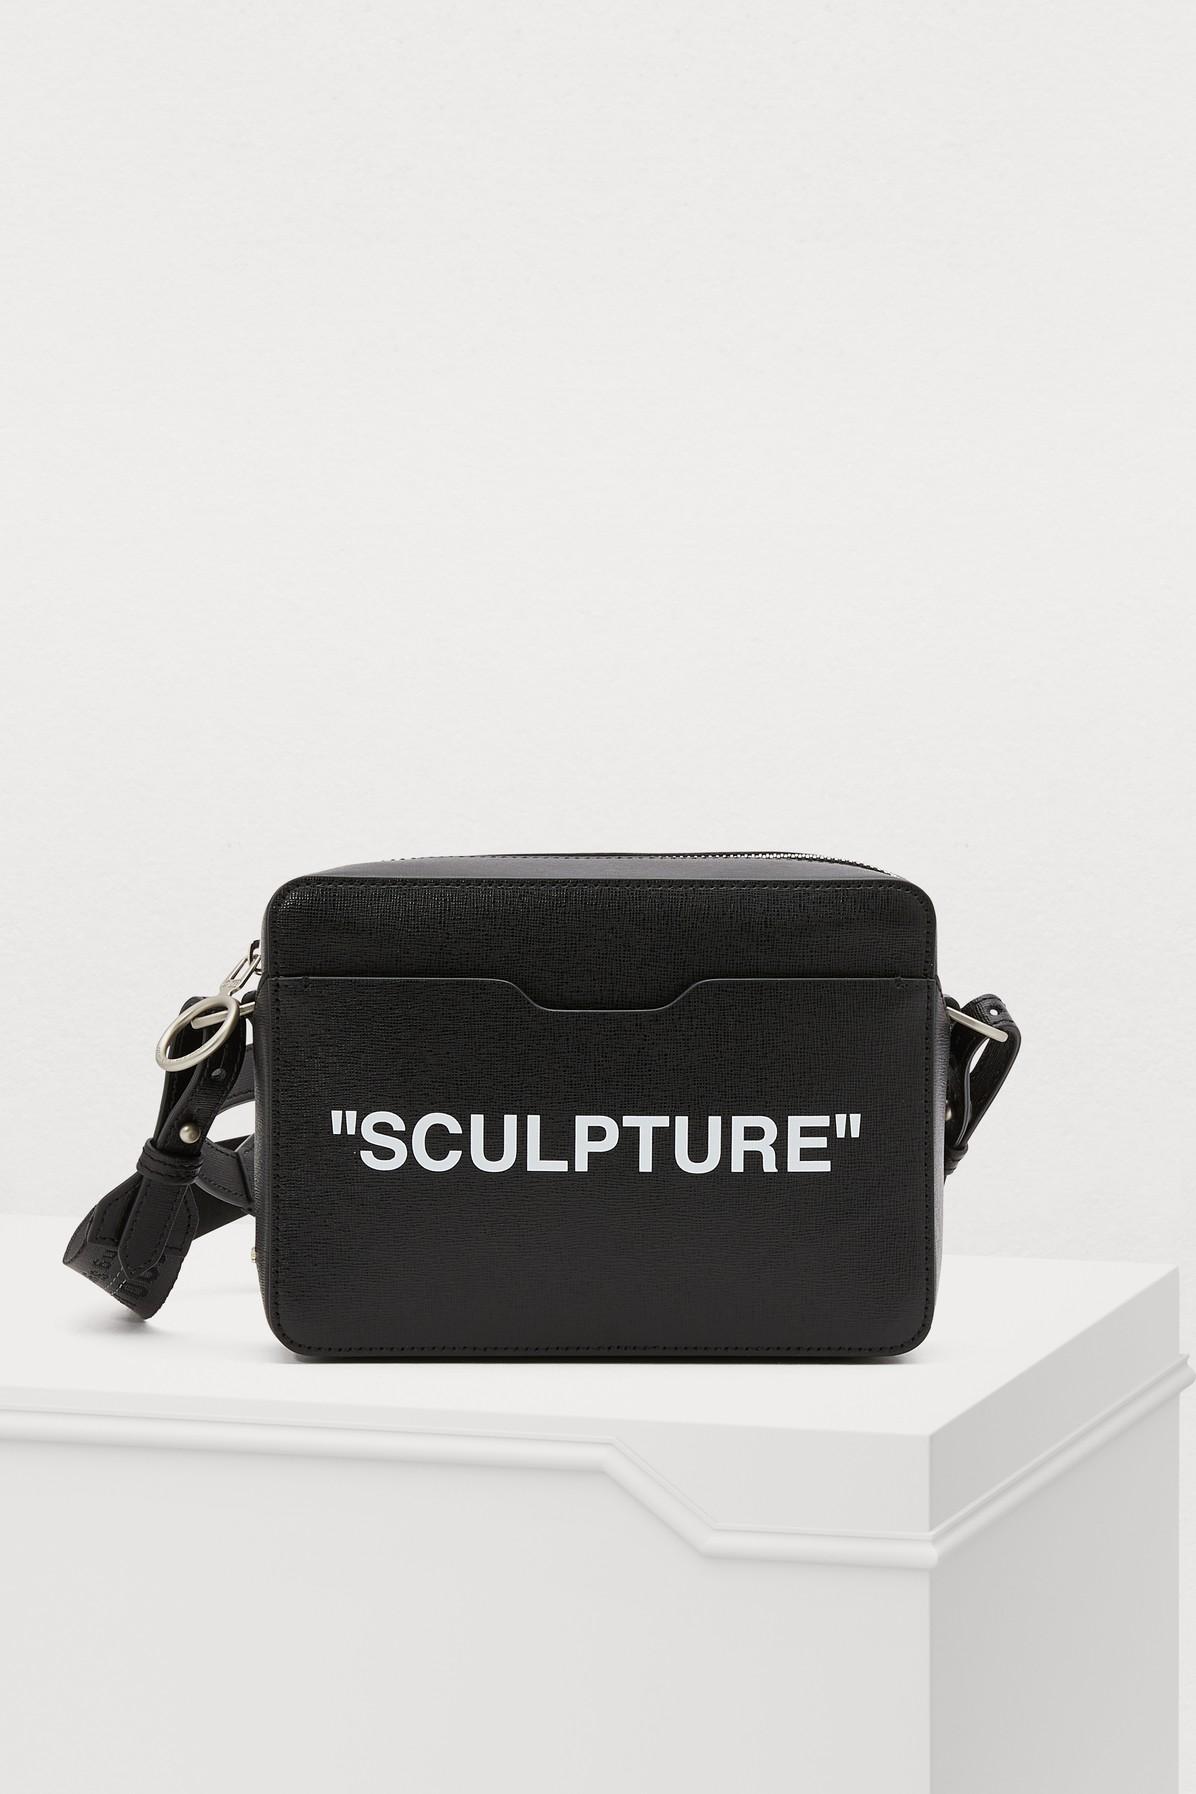 Off-White c/o Virgil Abloh Sculpture Crossbody Bag in Black | Lyst